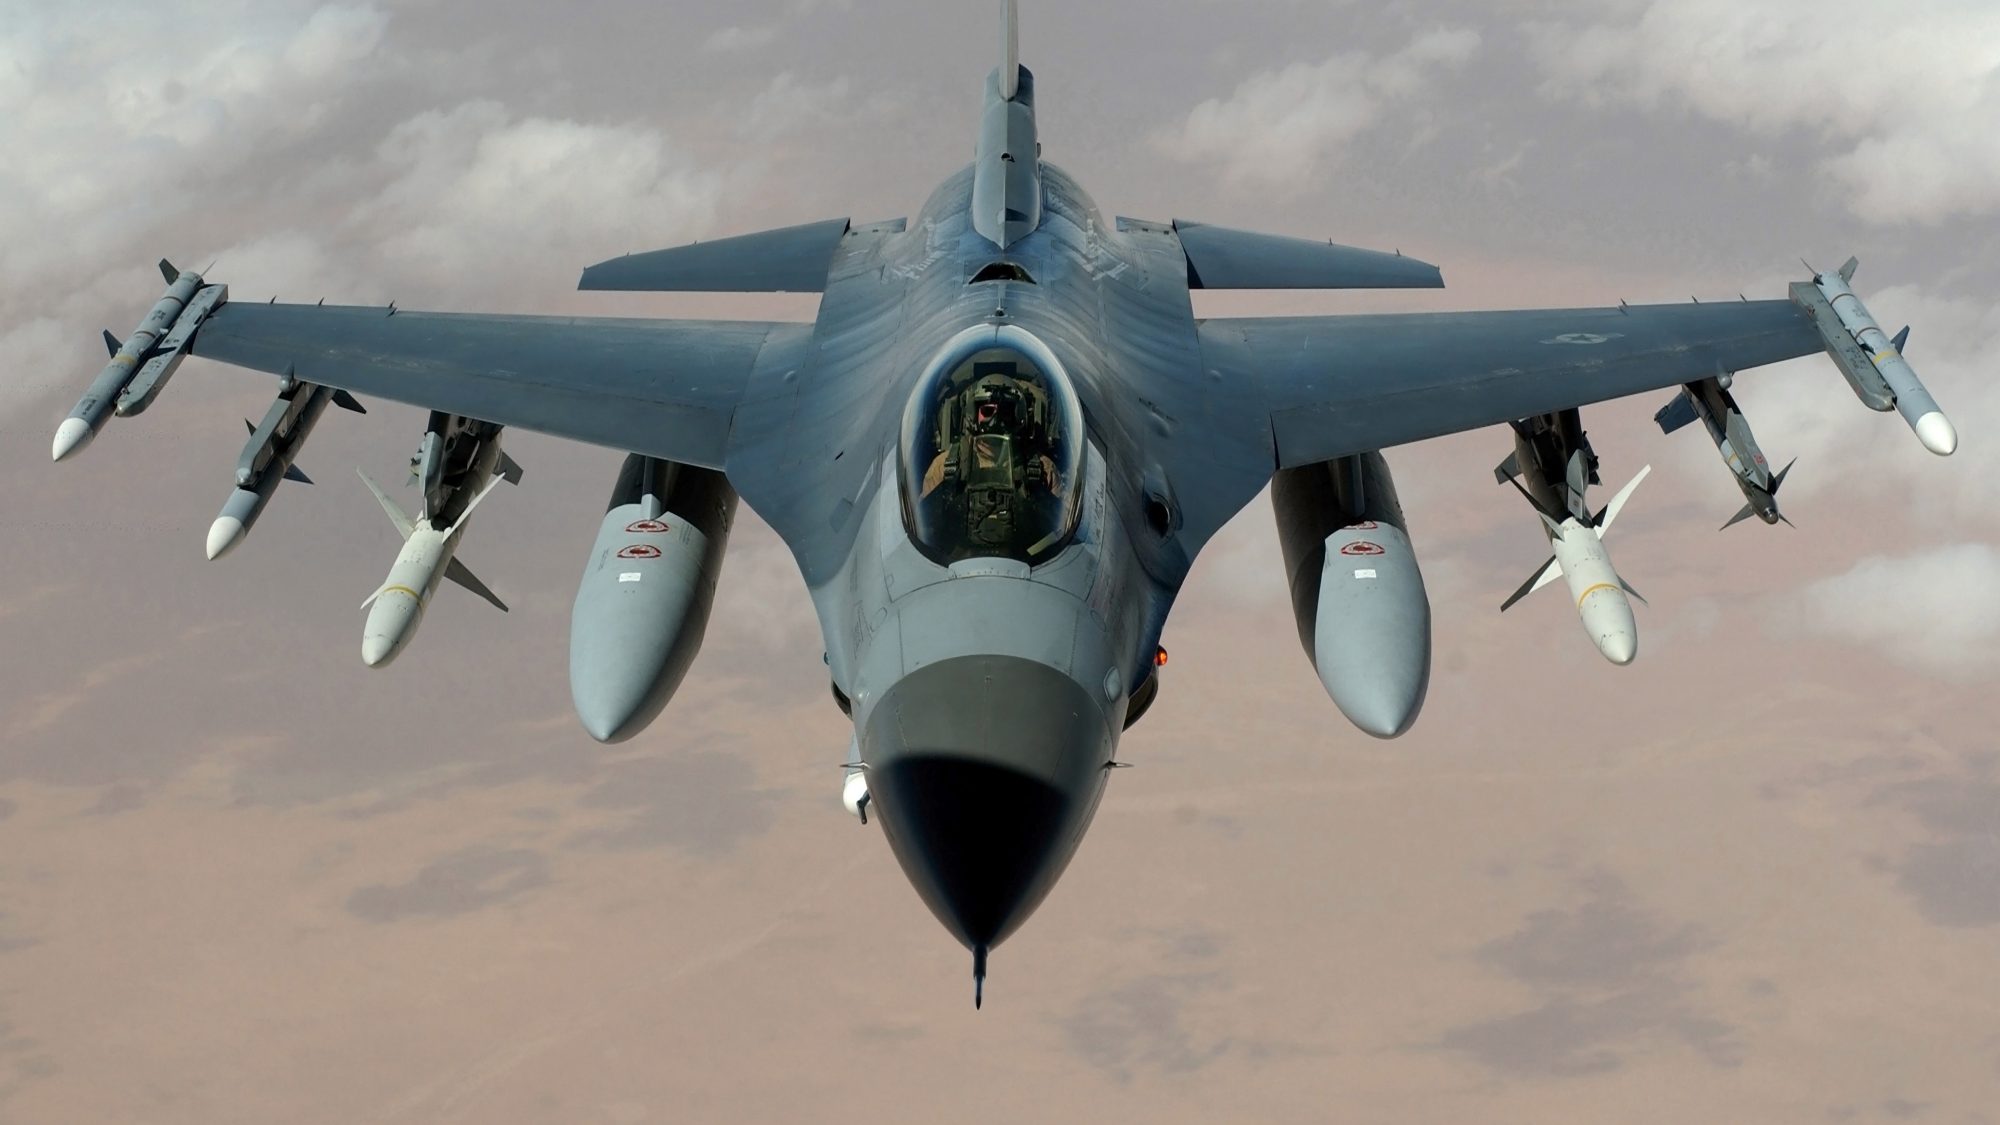 A fighter jet flying over a desert